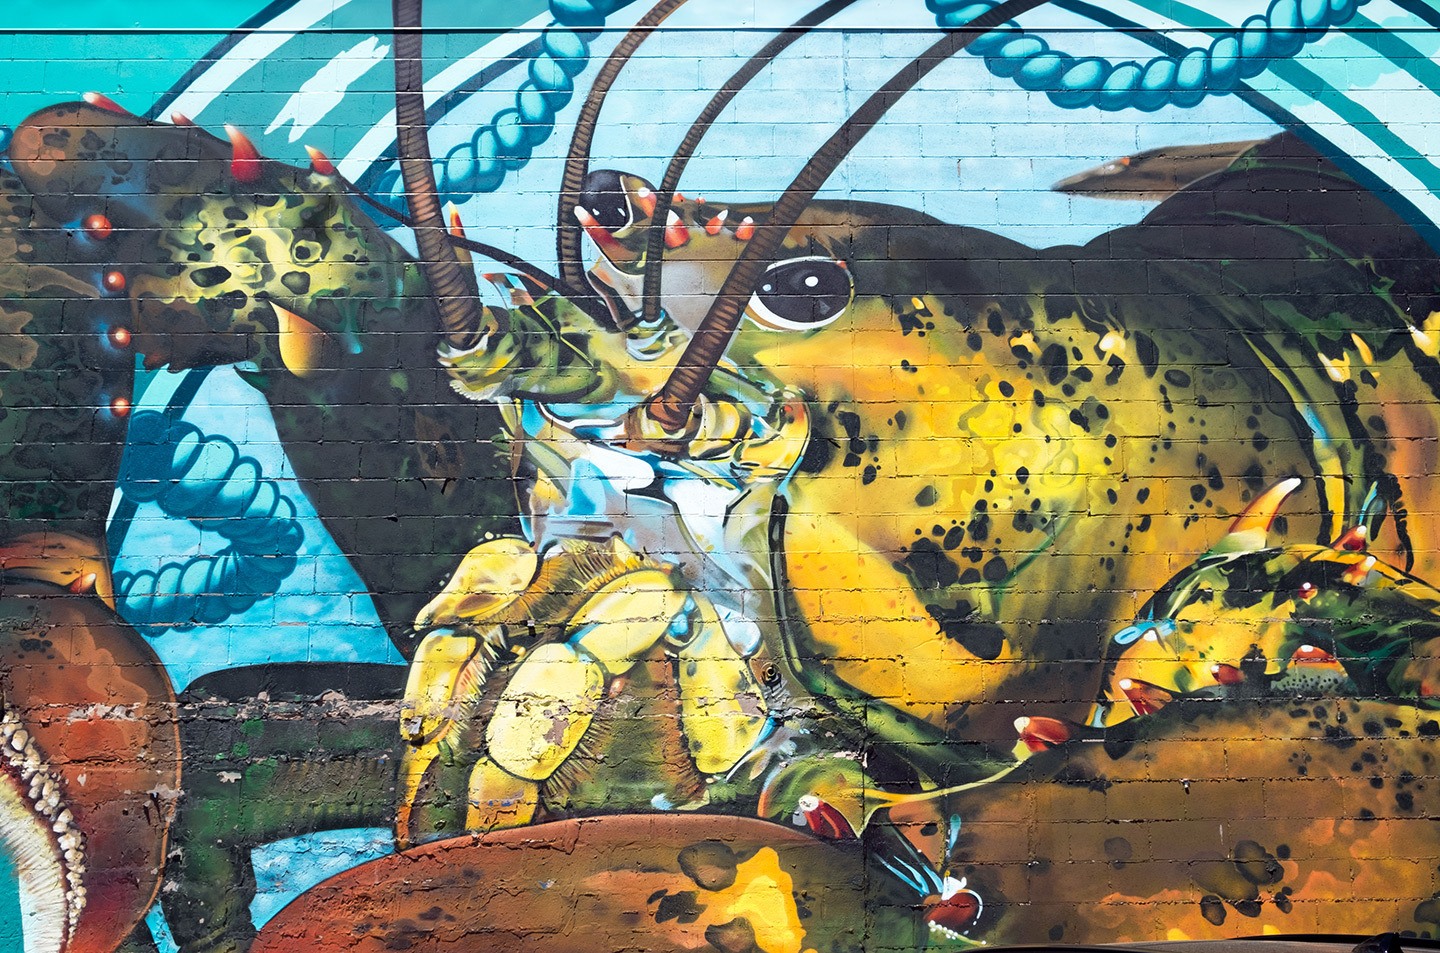 Lobster street art in Charlottetown, Prince Edward Island